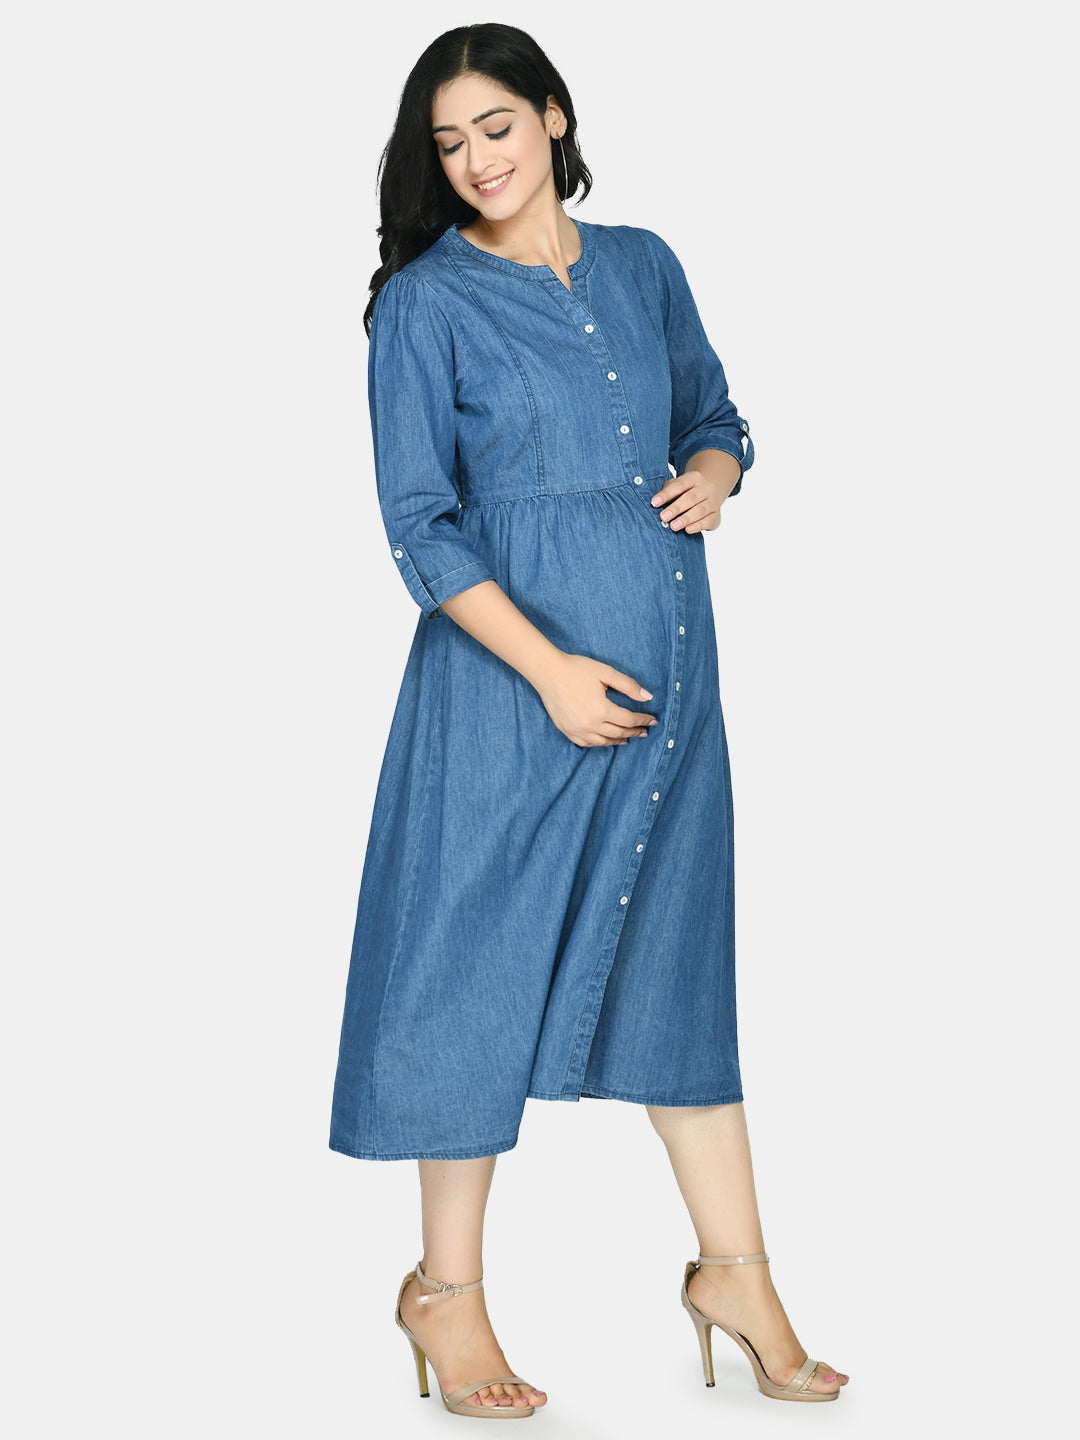 ALSOGO Denim Jean Dress for Women Long Sleeve Waist Ties Casual Denim Dress  Button Down Spring Fall Casual Dress Small Light Blue at Amazon Women's  Clothing store